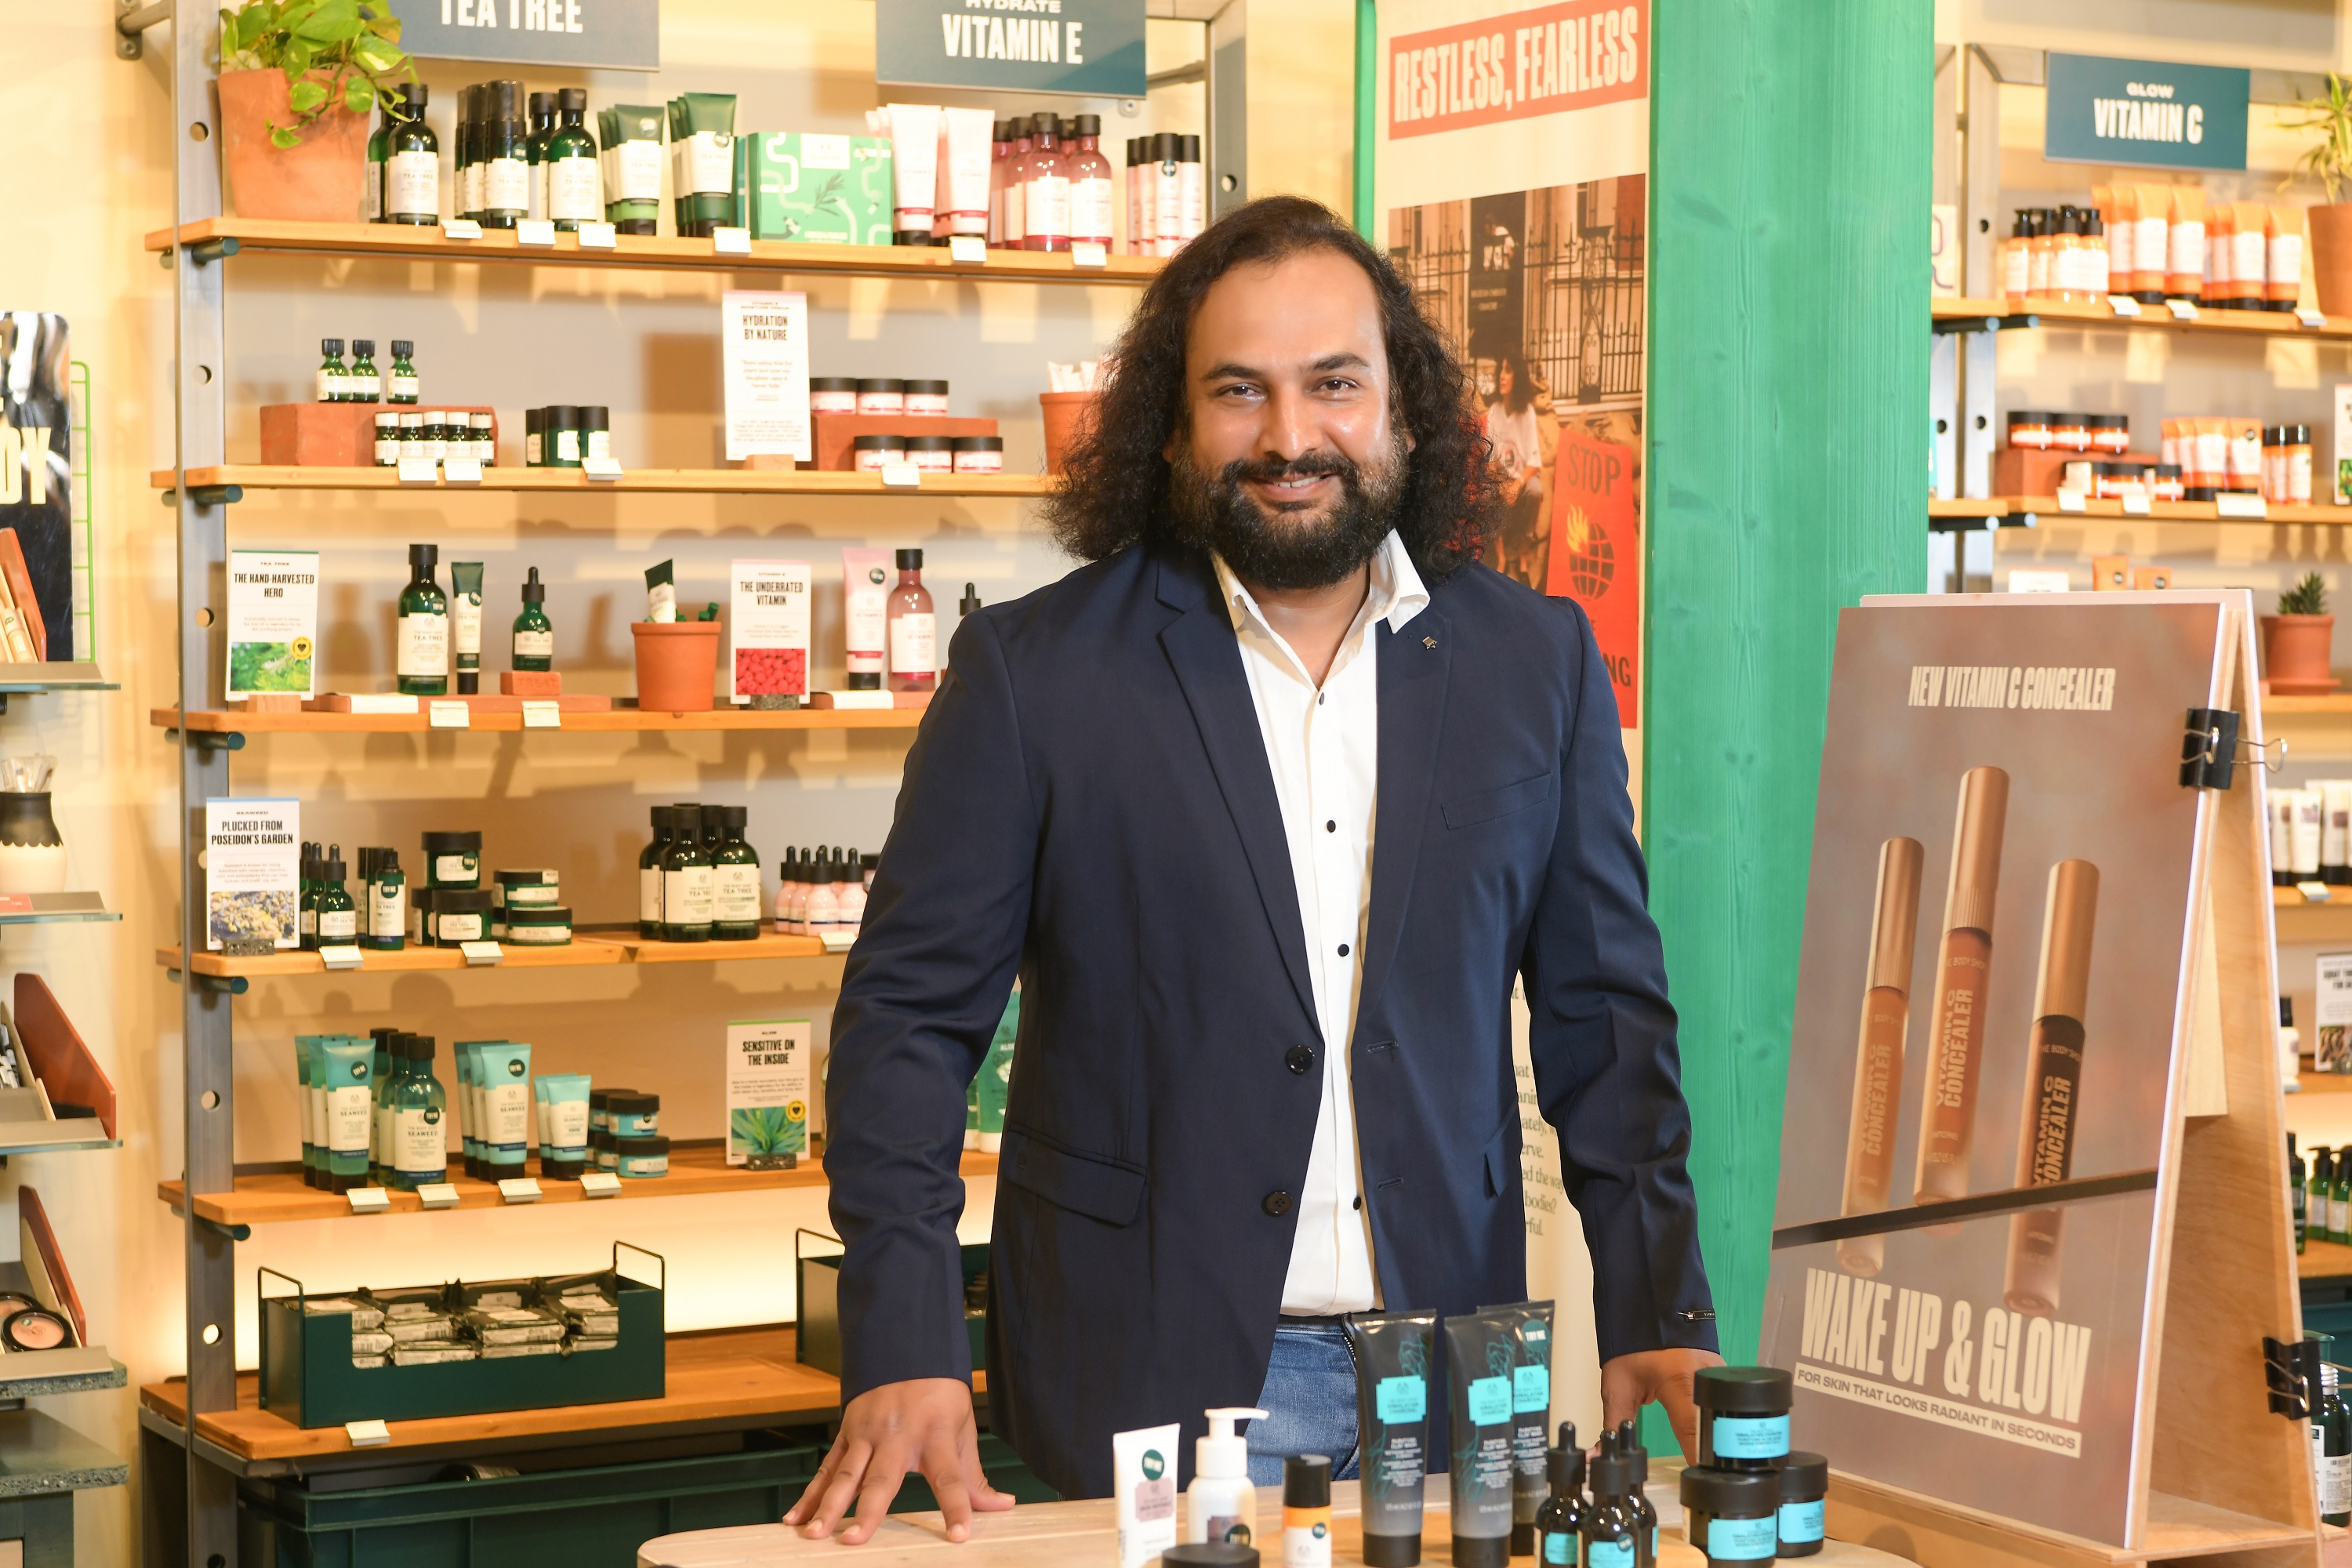 Vishal Chaturvedi, Vice President, The Body Shop Asia South